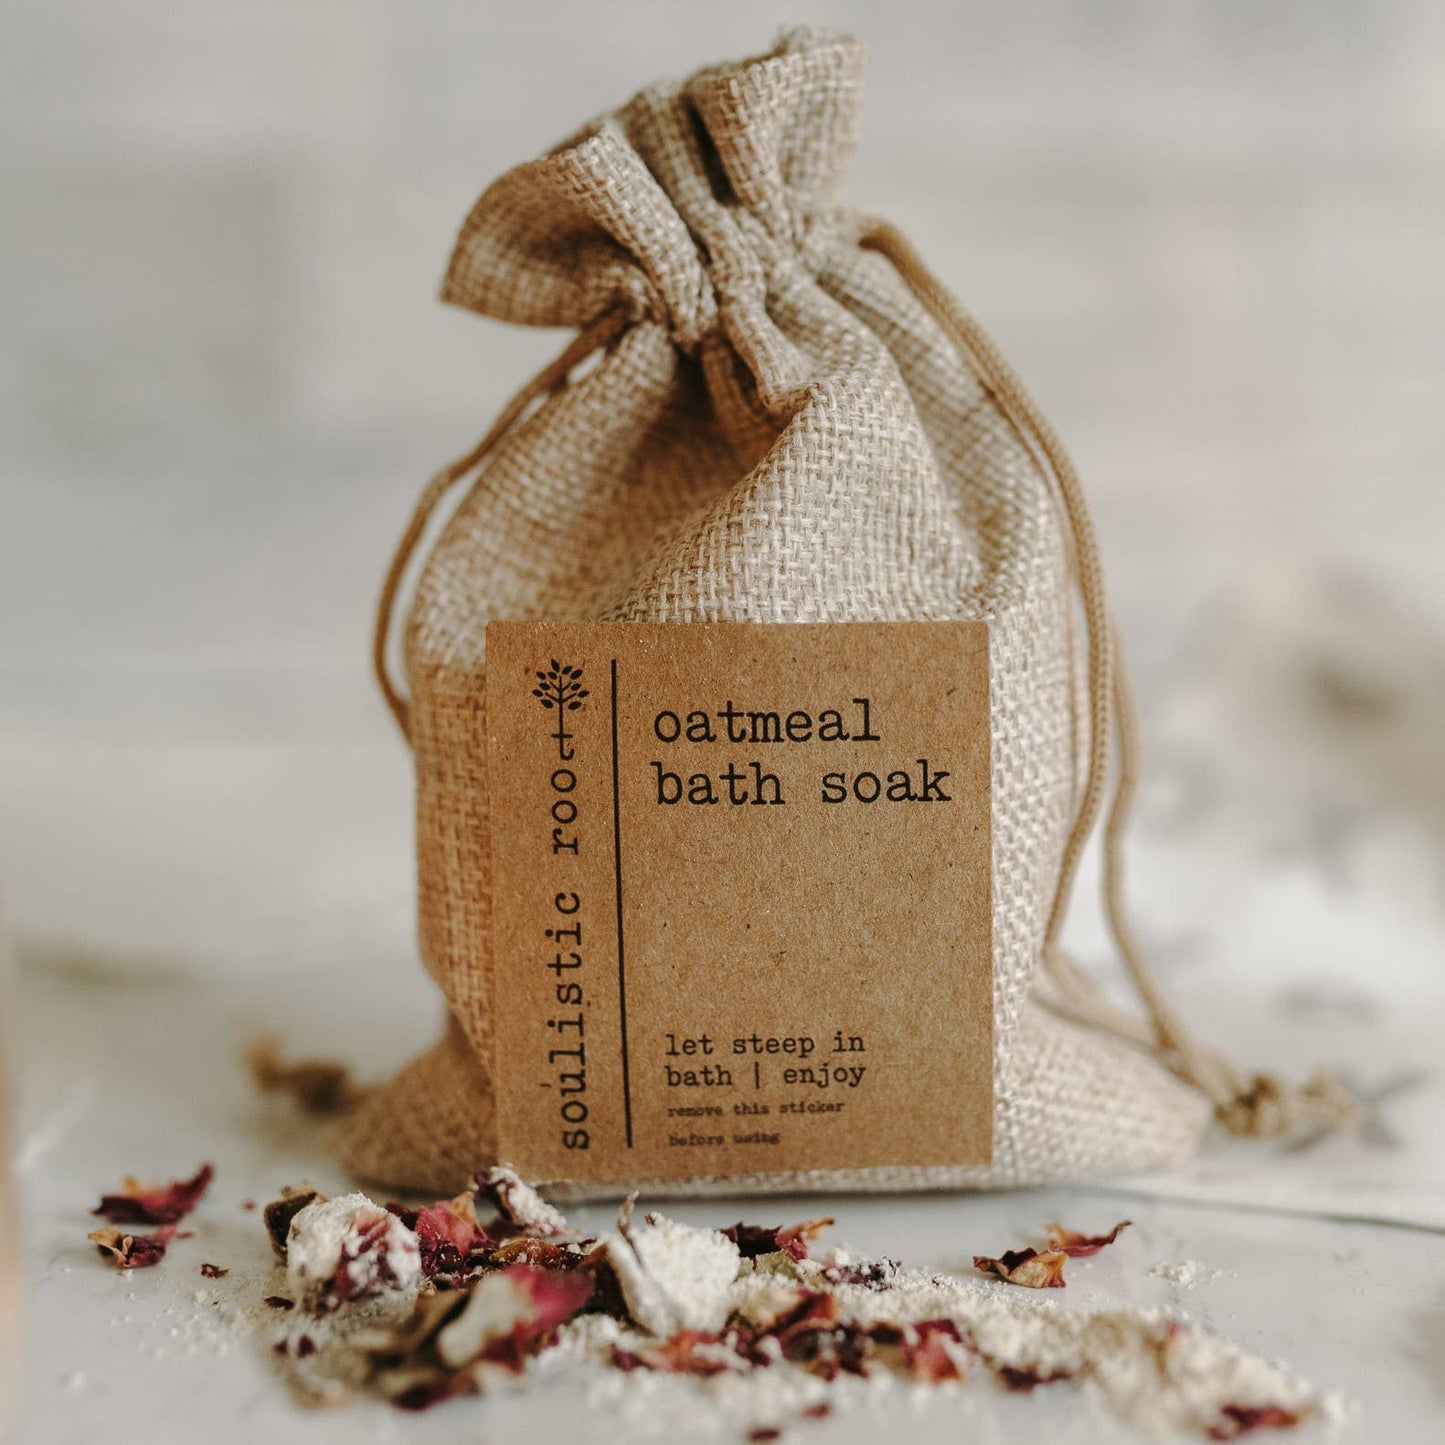 Essential Oils & Self Care Gifts - Rose Petal Herbal Oatmeal Bath Soak | Bath Tea: Lavender